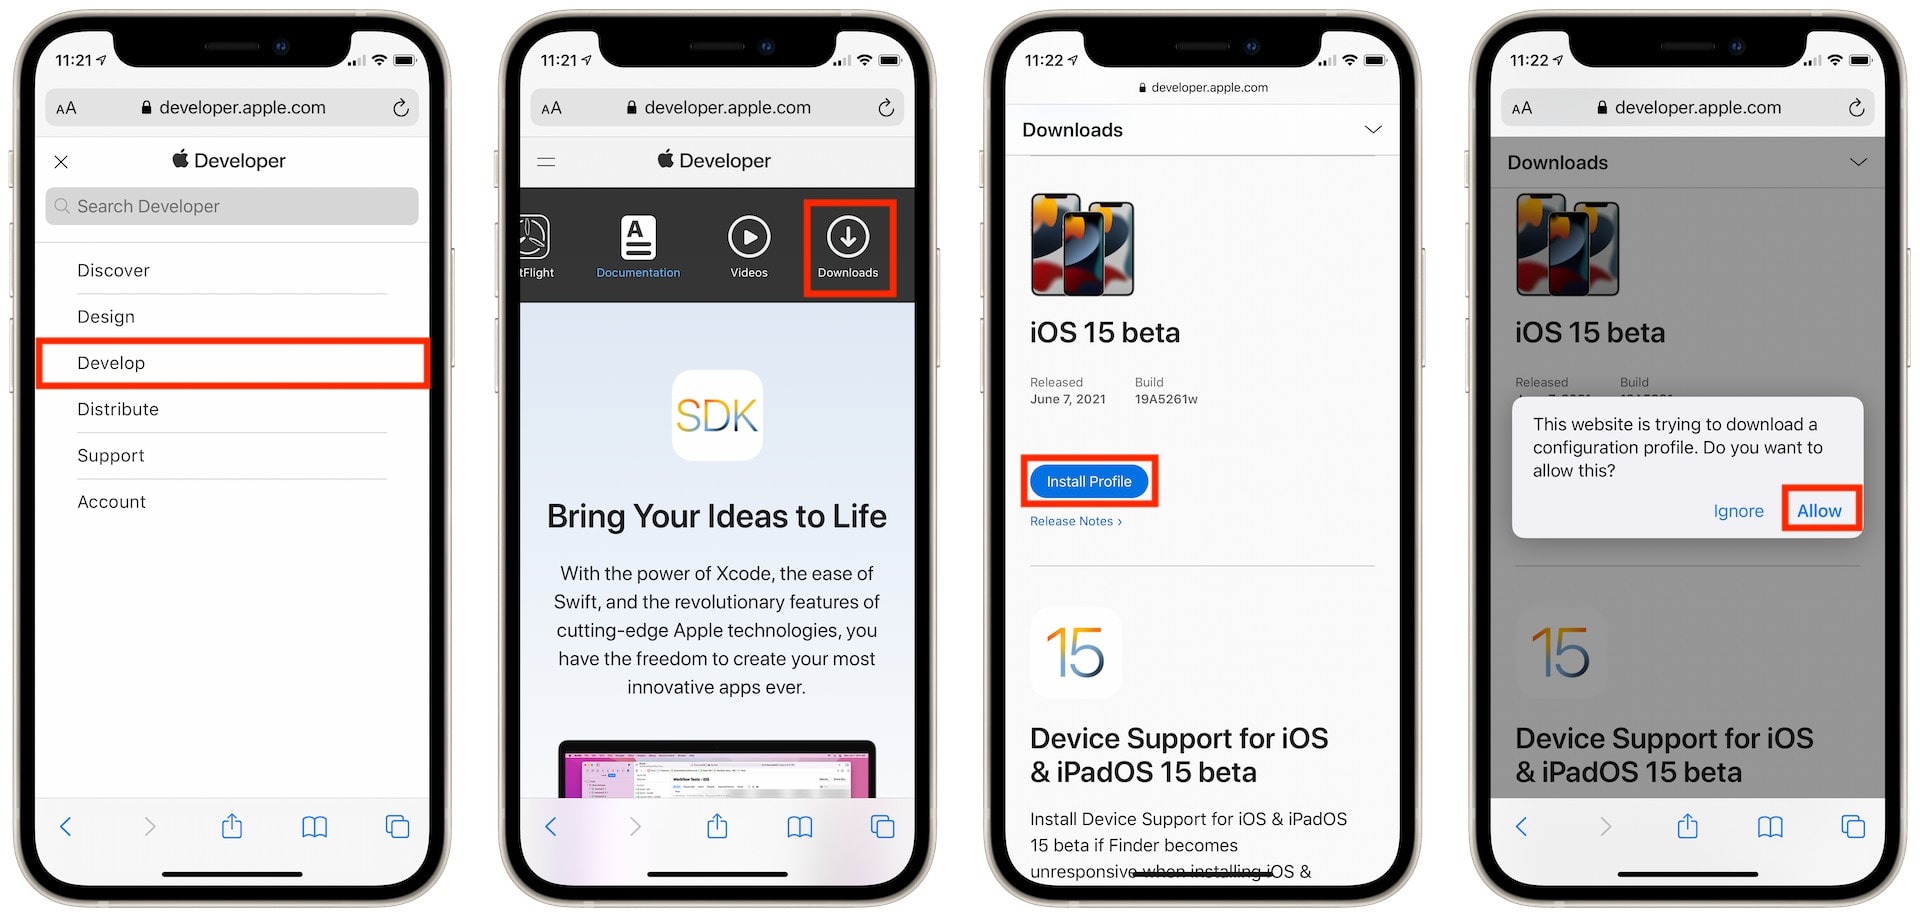 How to download iOS 15 developer beta